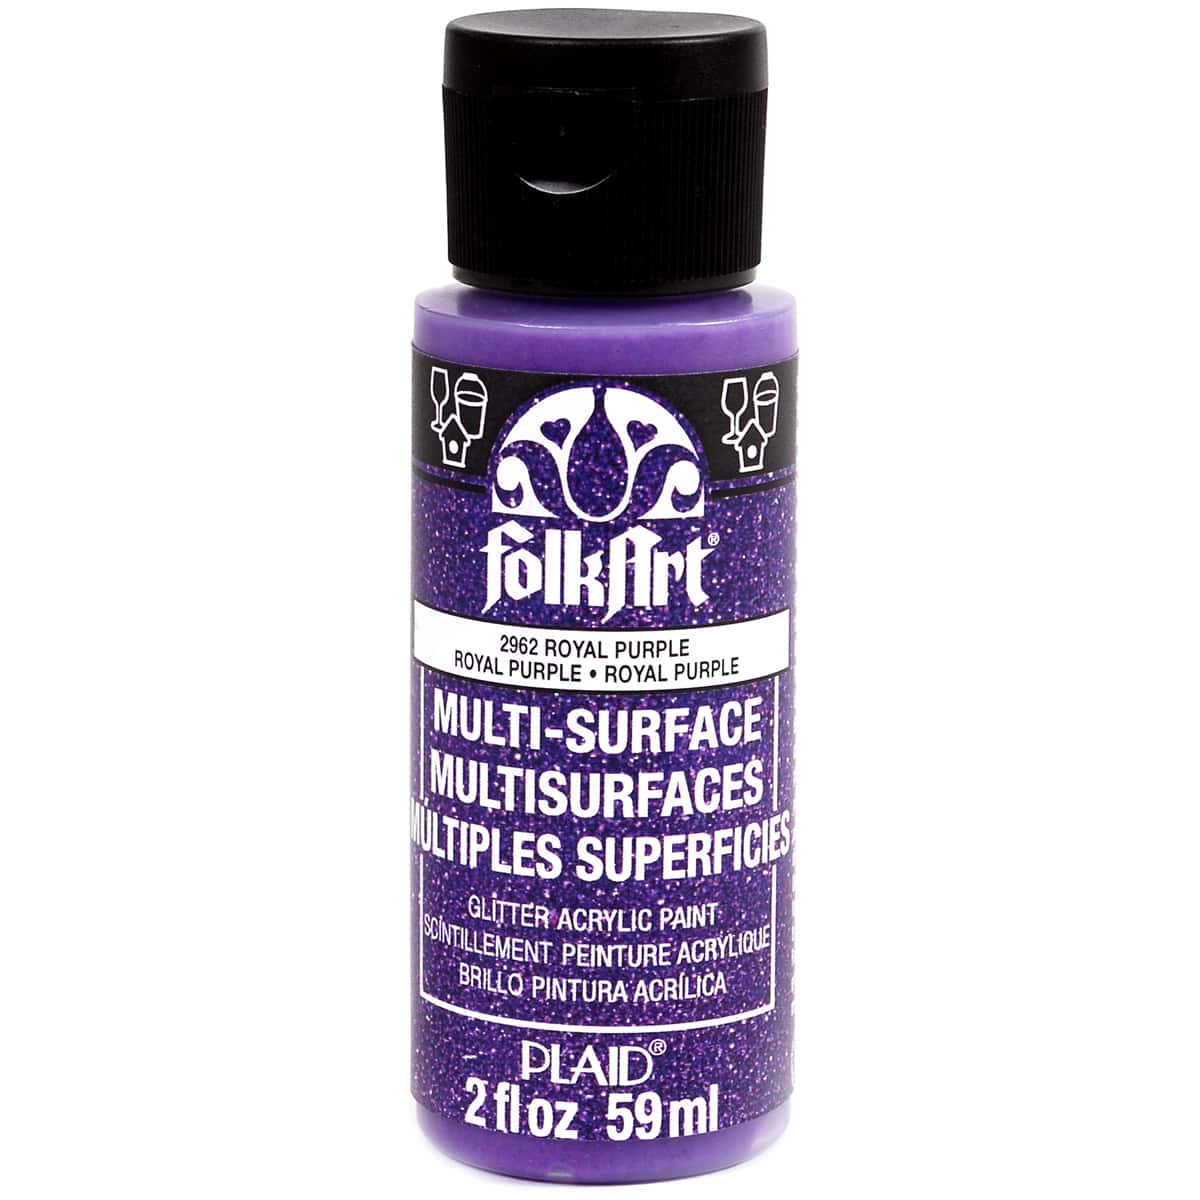 Multi-Surface Glitter Acrylic Paint in Royal Purple by FolkArt